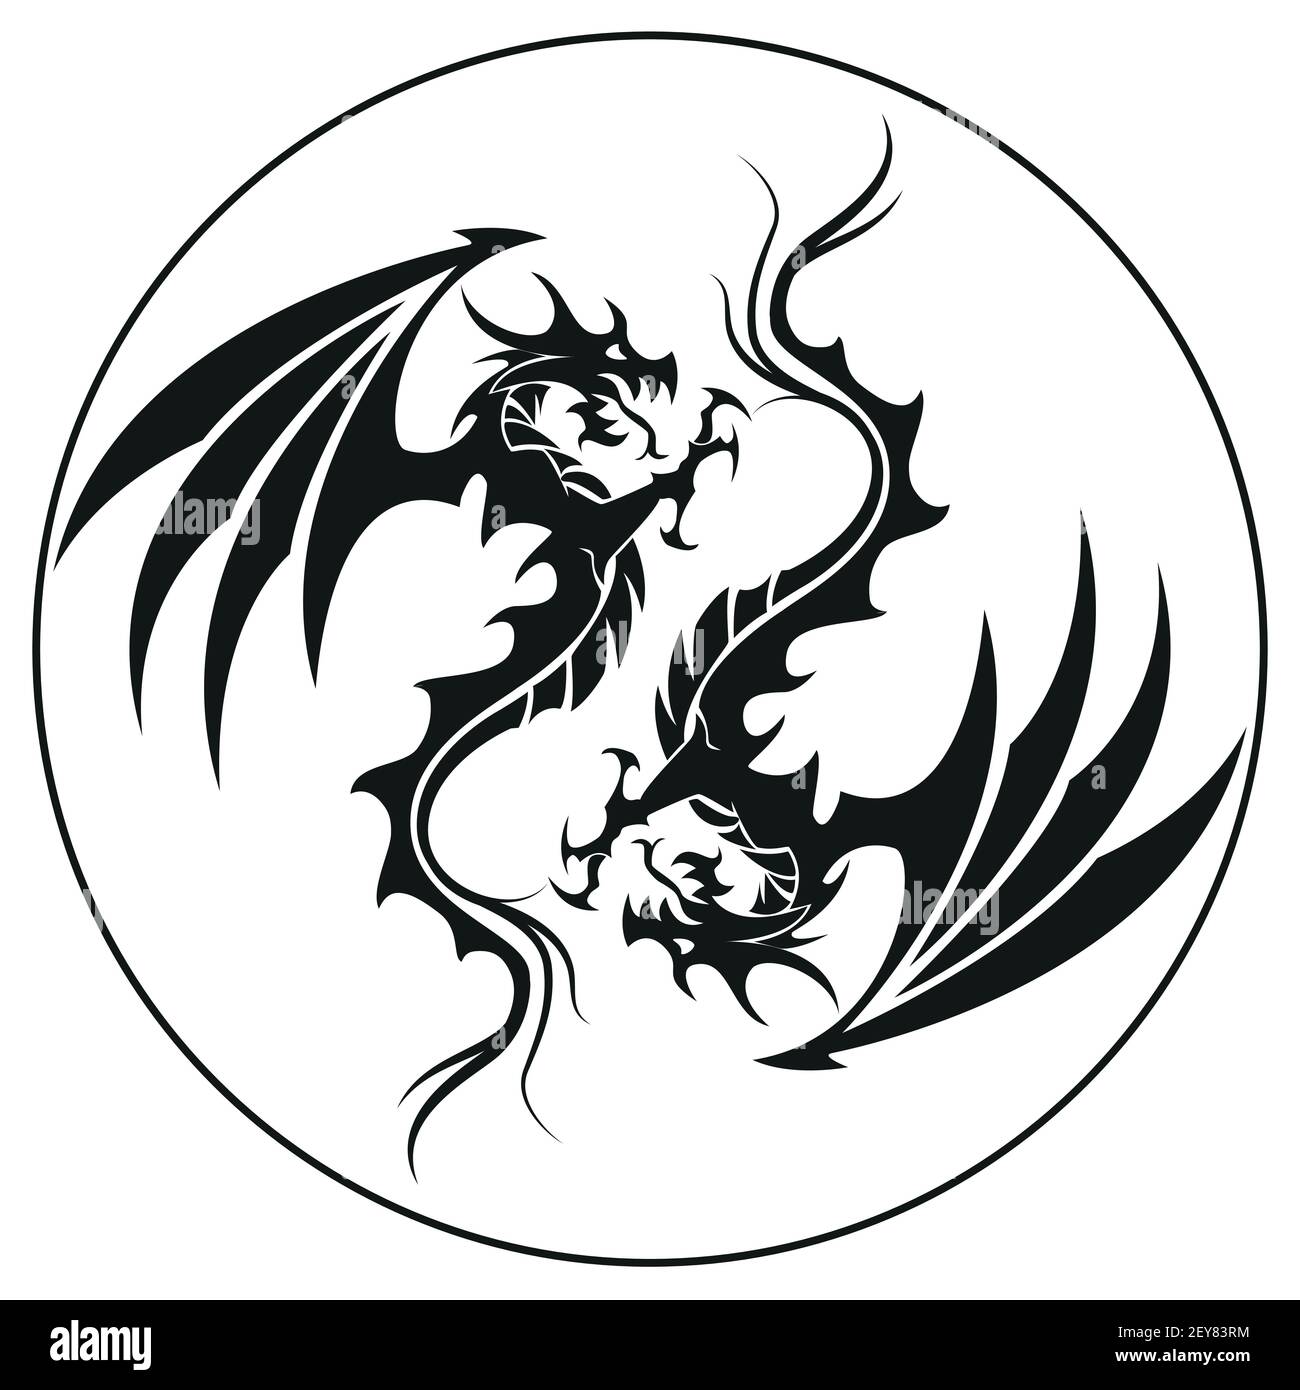 dragon yin yang - Google Search  Ilustraciones de tatuajes, Tatuajes  blancos, Illustration